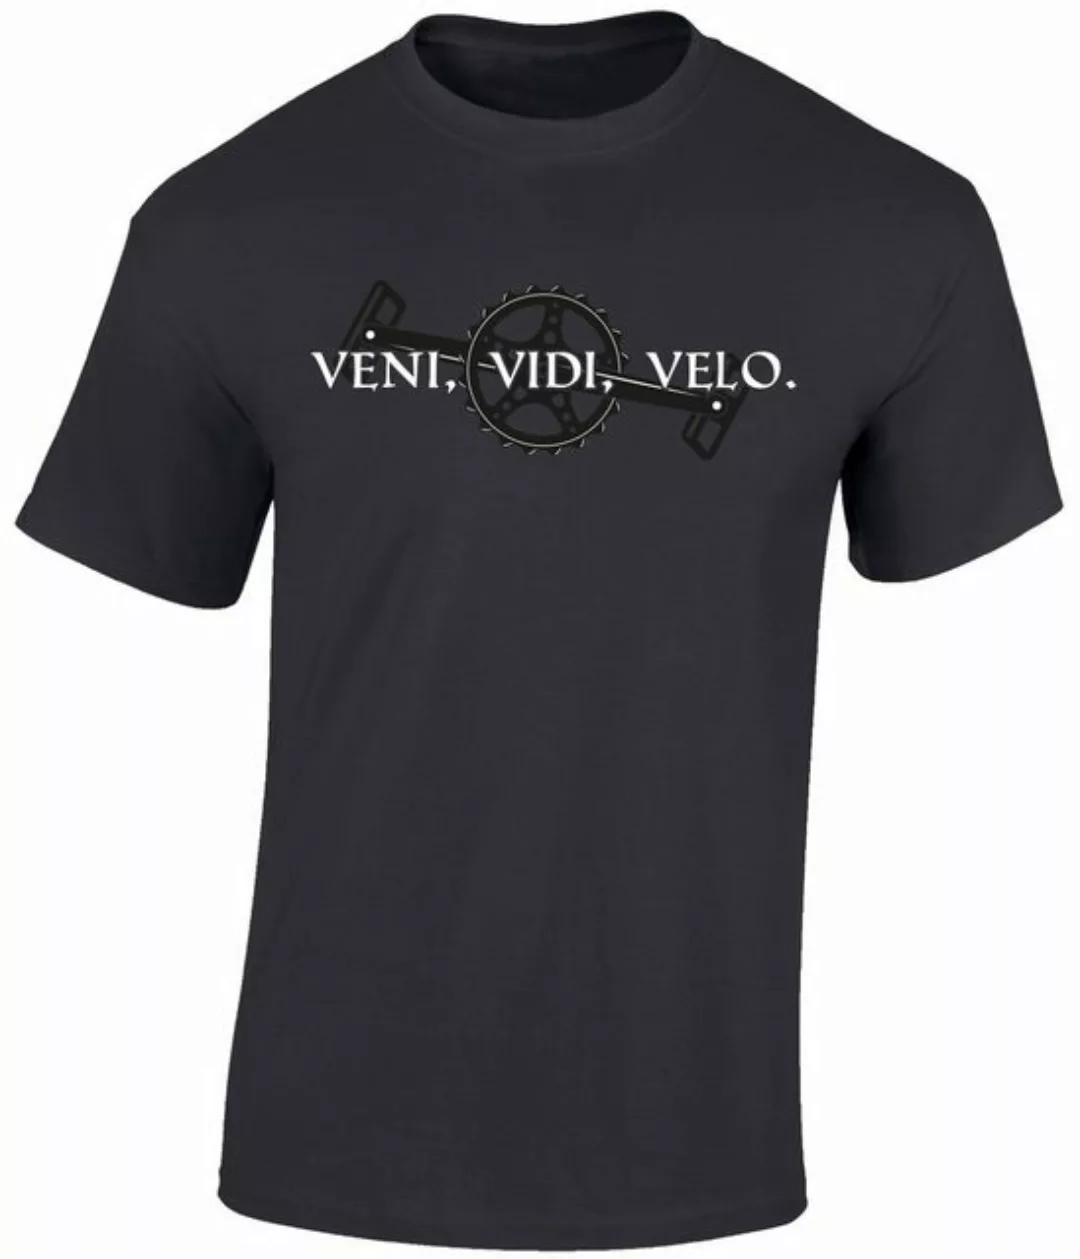 Baddery Print-Shirt Fahrrad T-Shirt: "Veni Vidi Velo" - Latein Fun Shirt, h günstig online kaufen